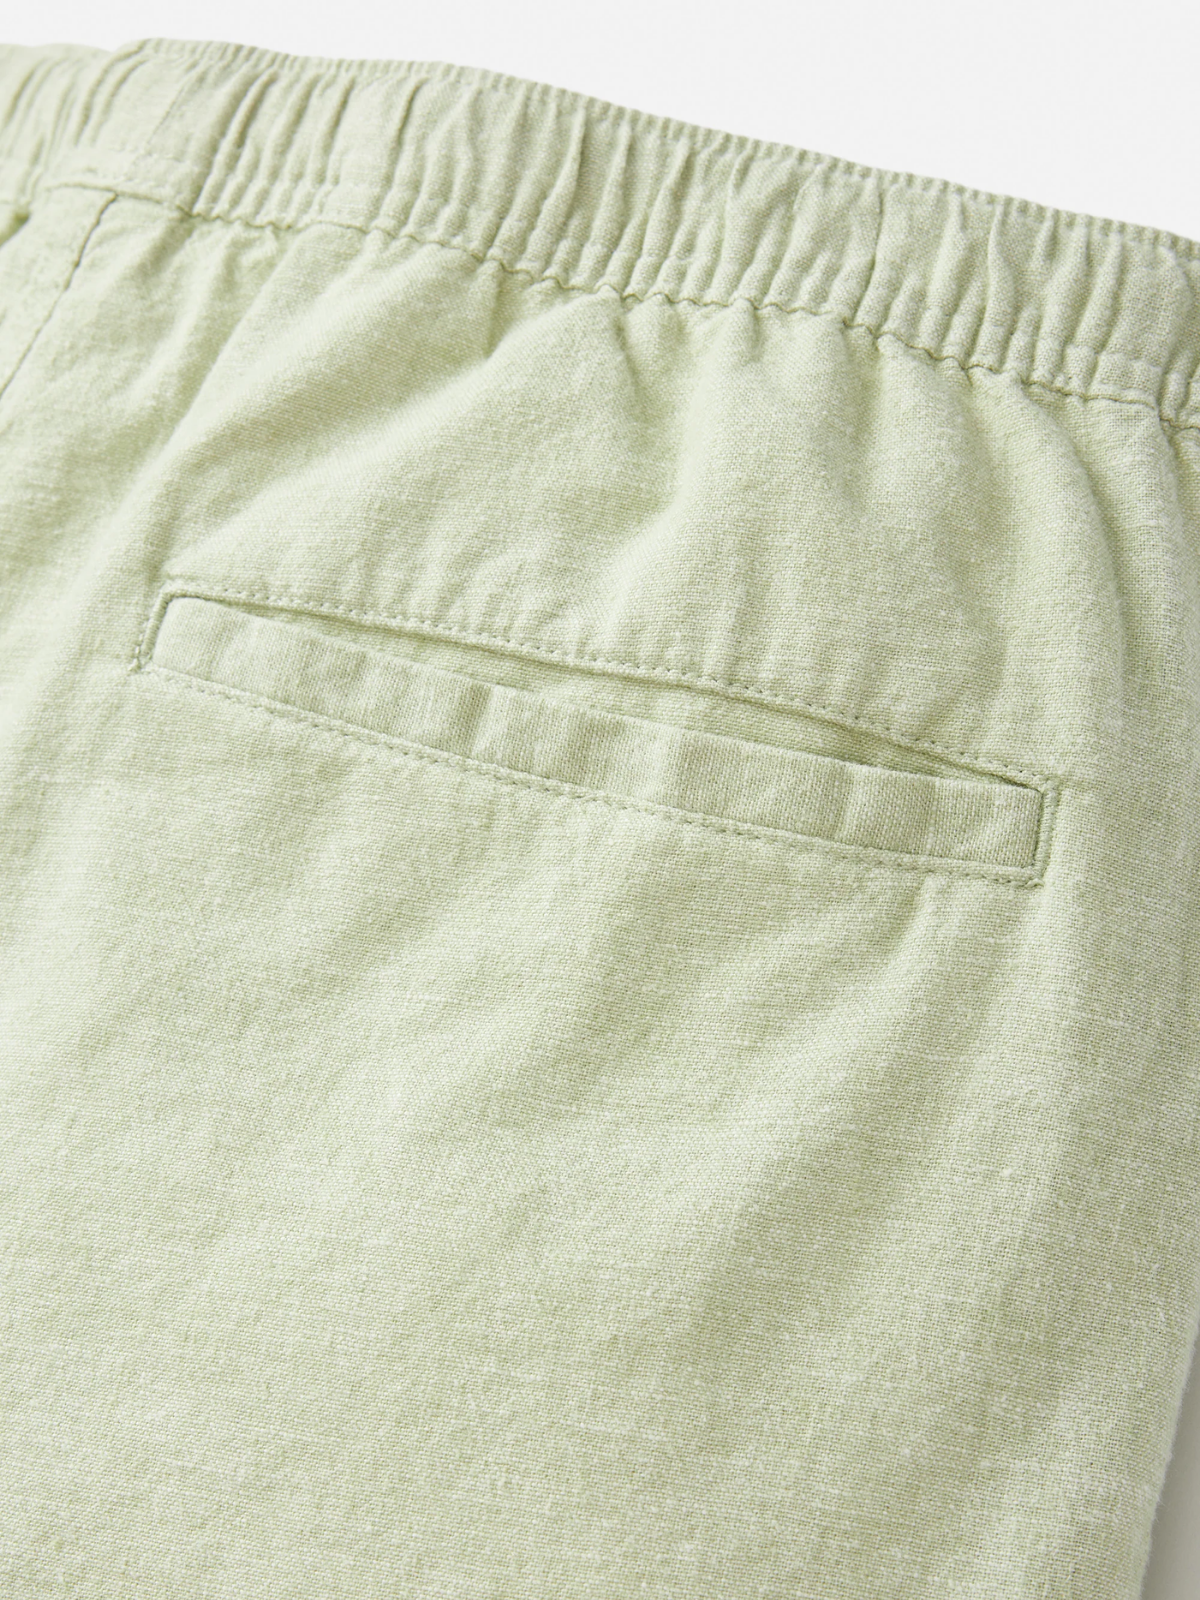 katin isaiah local short desert sage mint green cotton linen blend drawstring short with elastic waistband kempt athens ga georgia men's clothing store